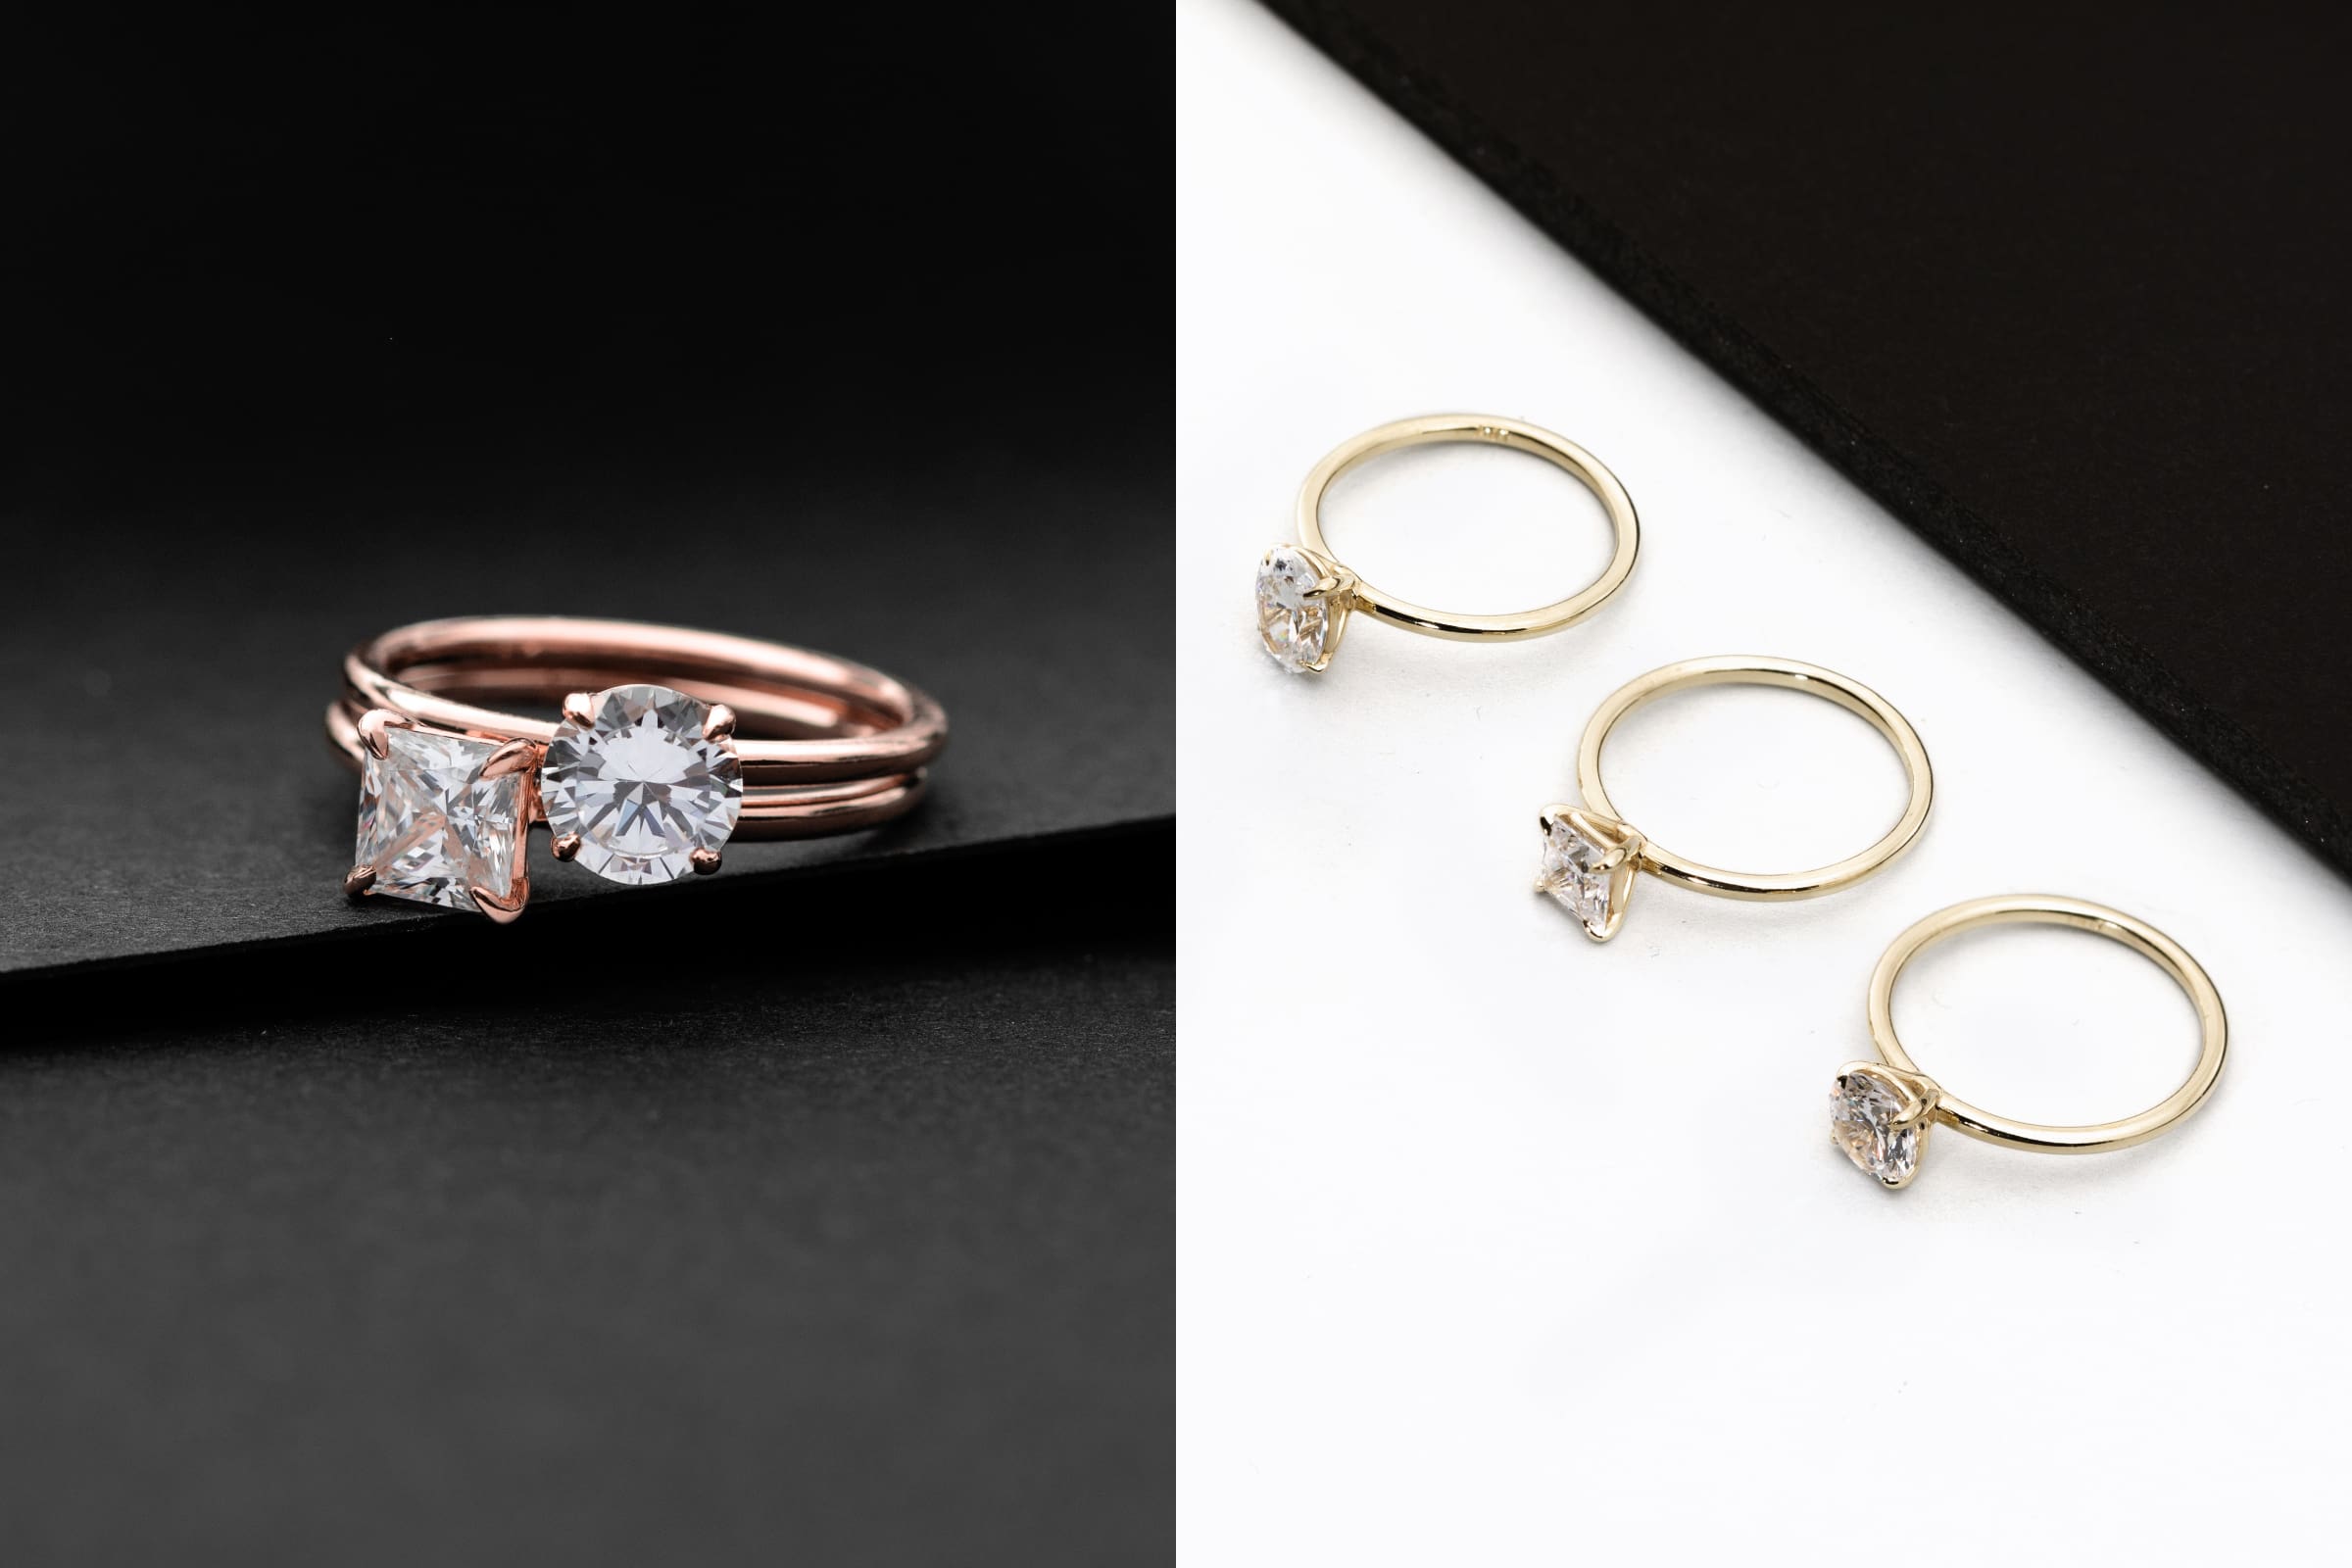 Maxs New Online Wedding Boutique Offers Unbridaled Diamonds by ILA Artful Living Magazine